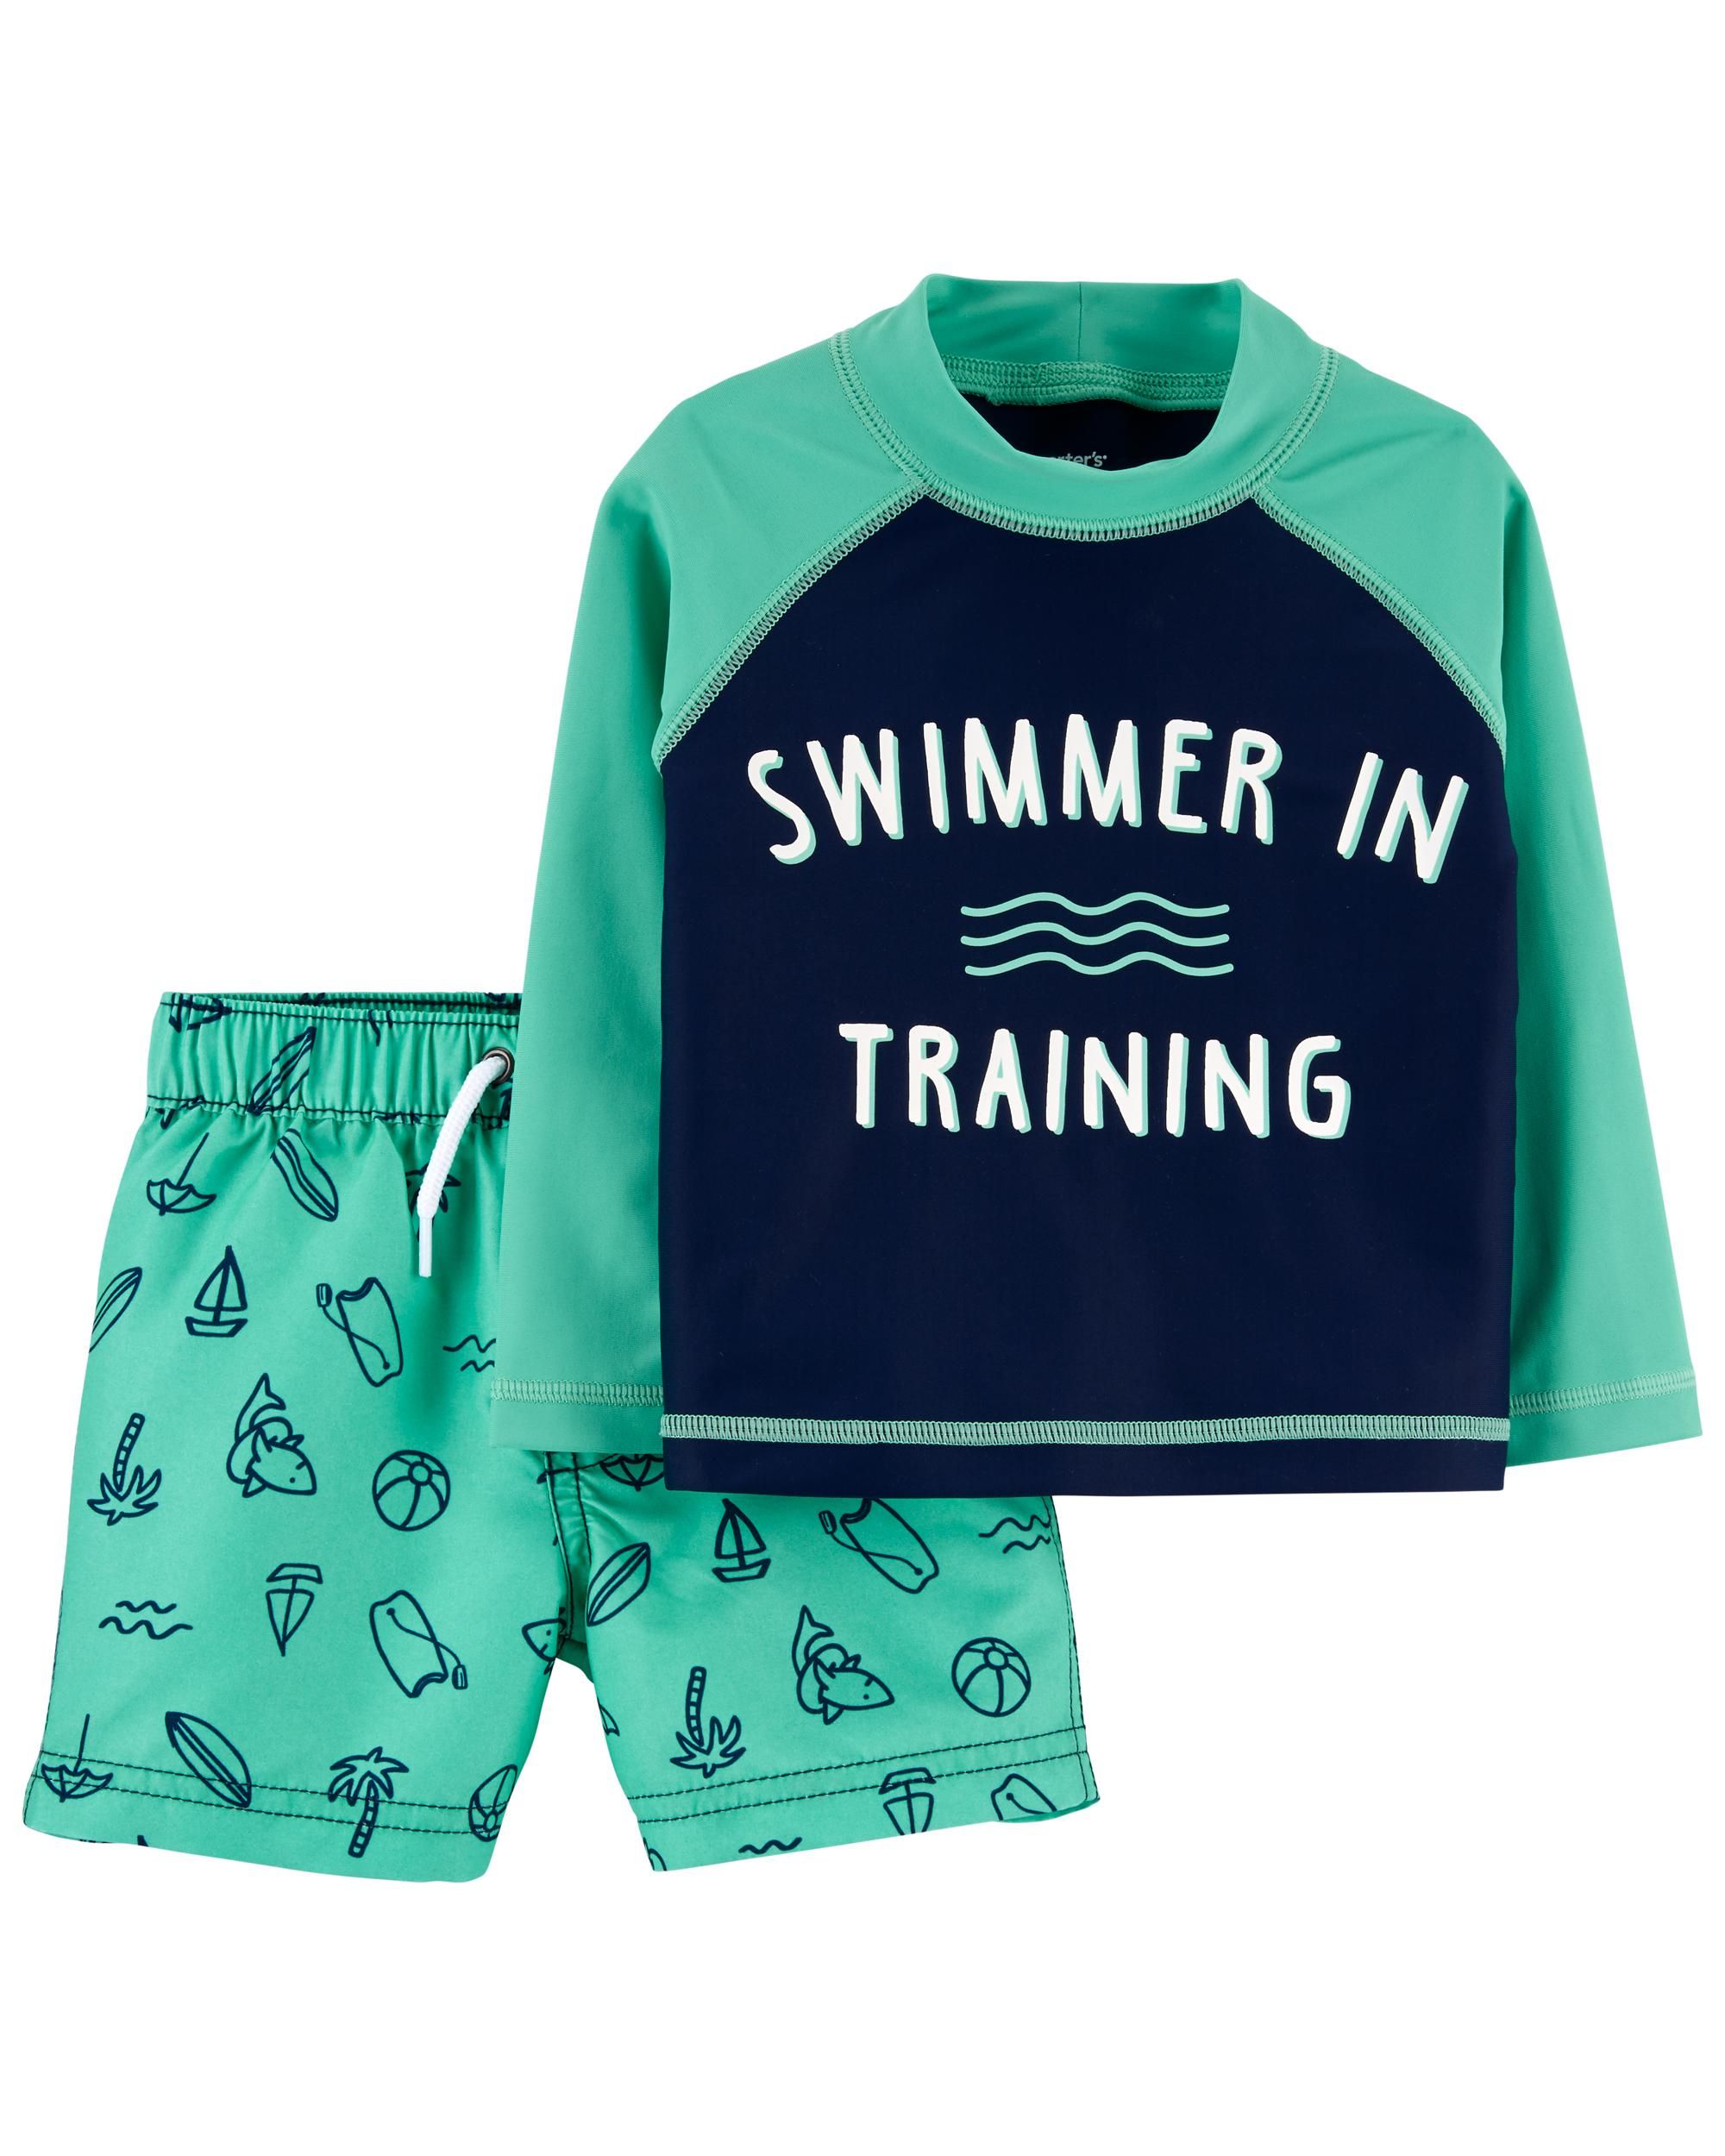 Carter's Swimmer Rashguard Set | Carter's